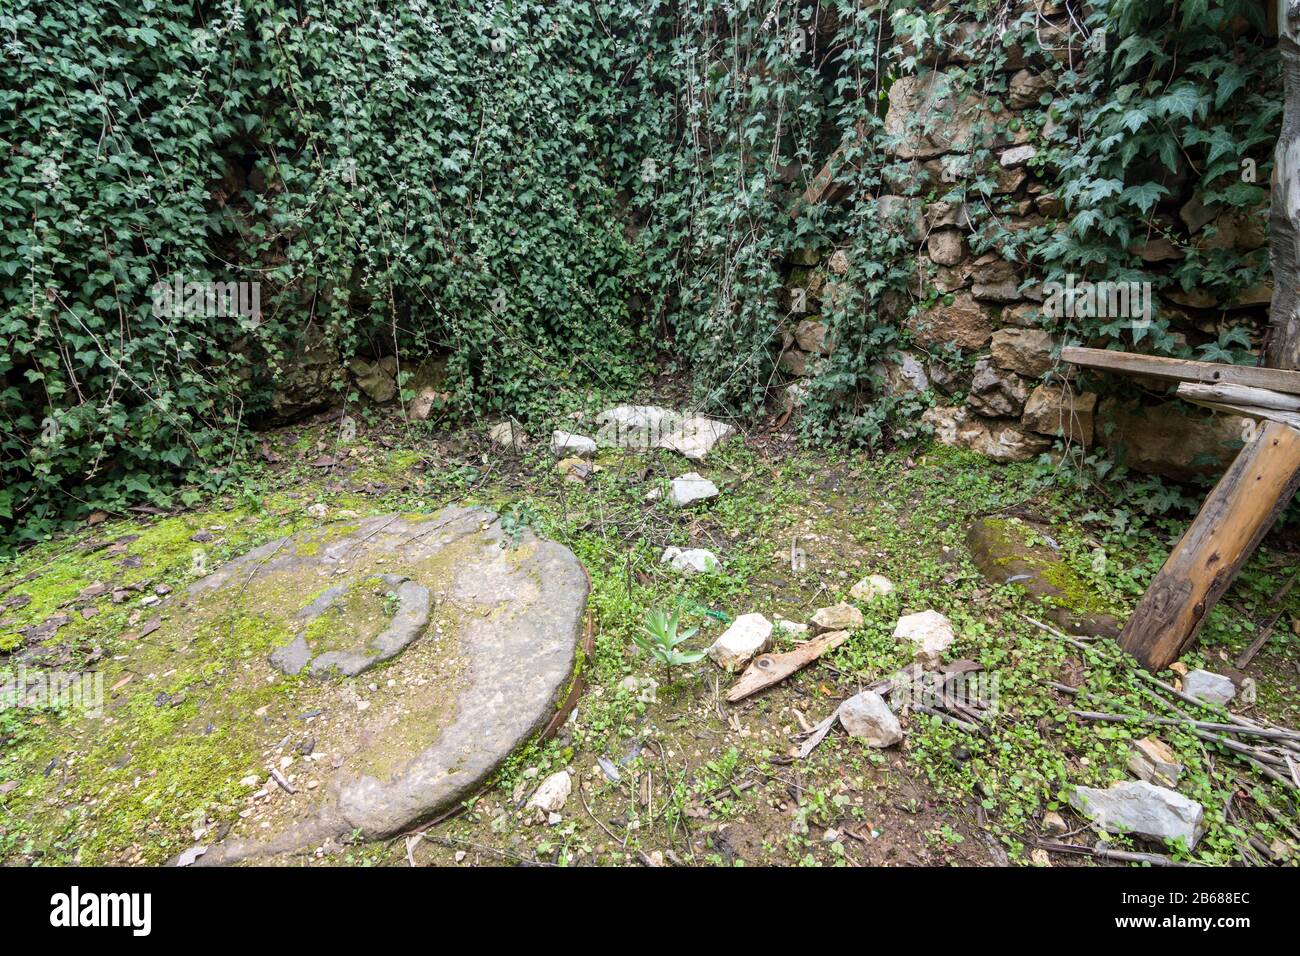 Ancienne presse d'olive enterrée dans le sol, vallée de qadisha Liban Banque D'Images